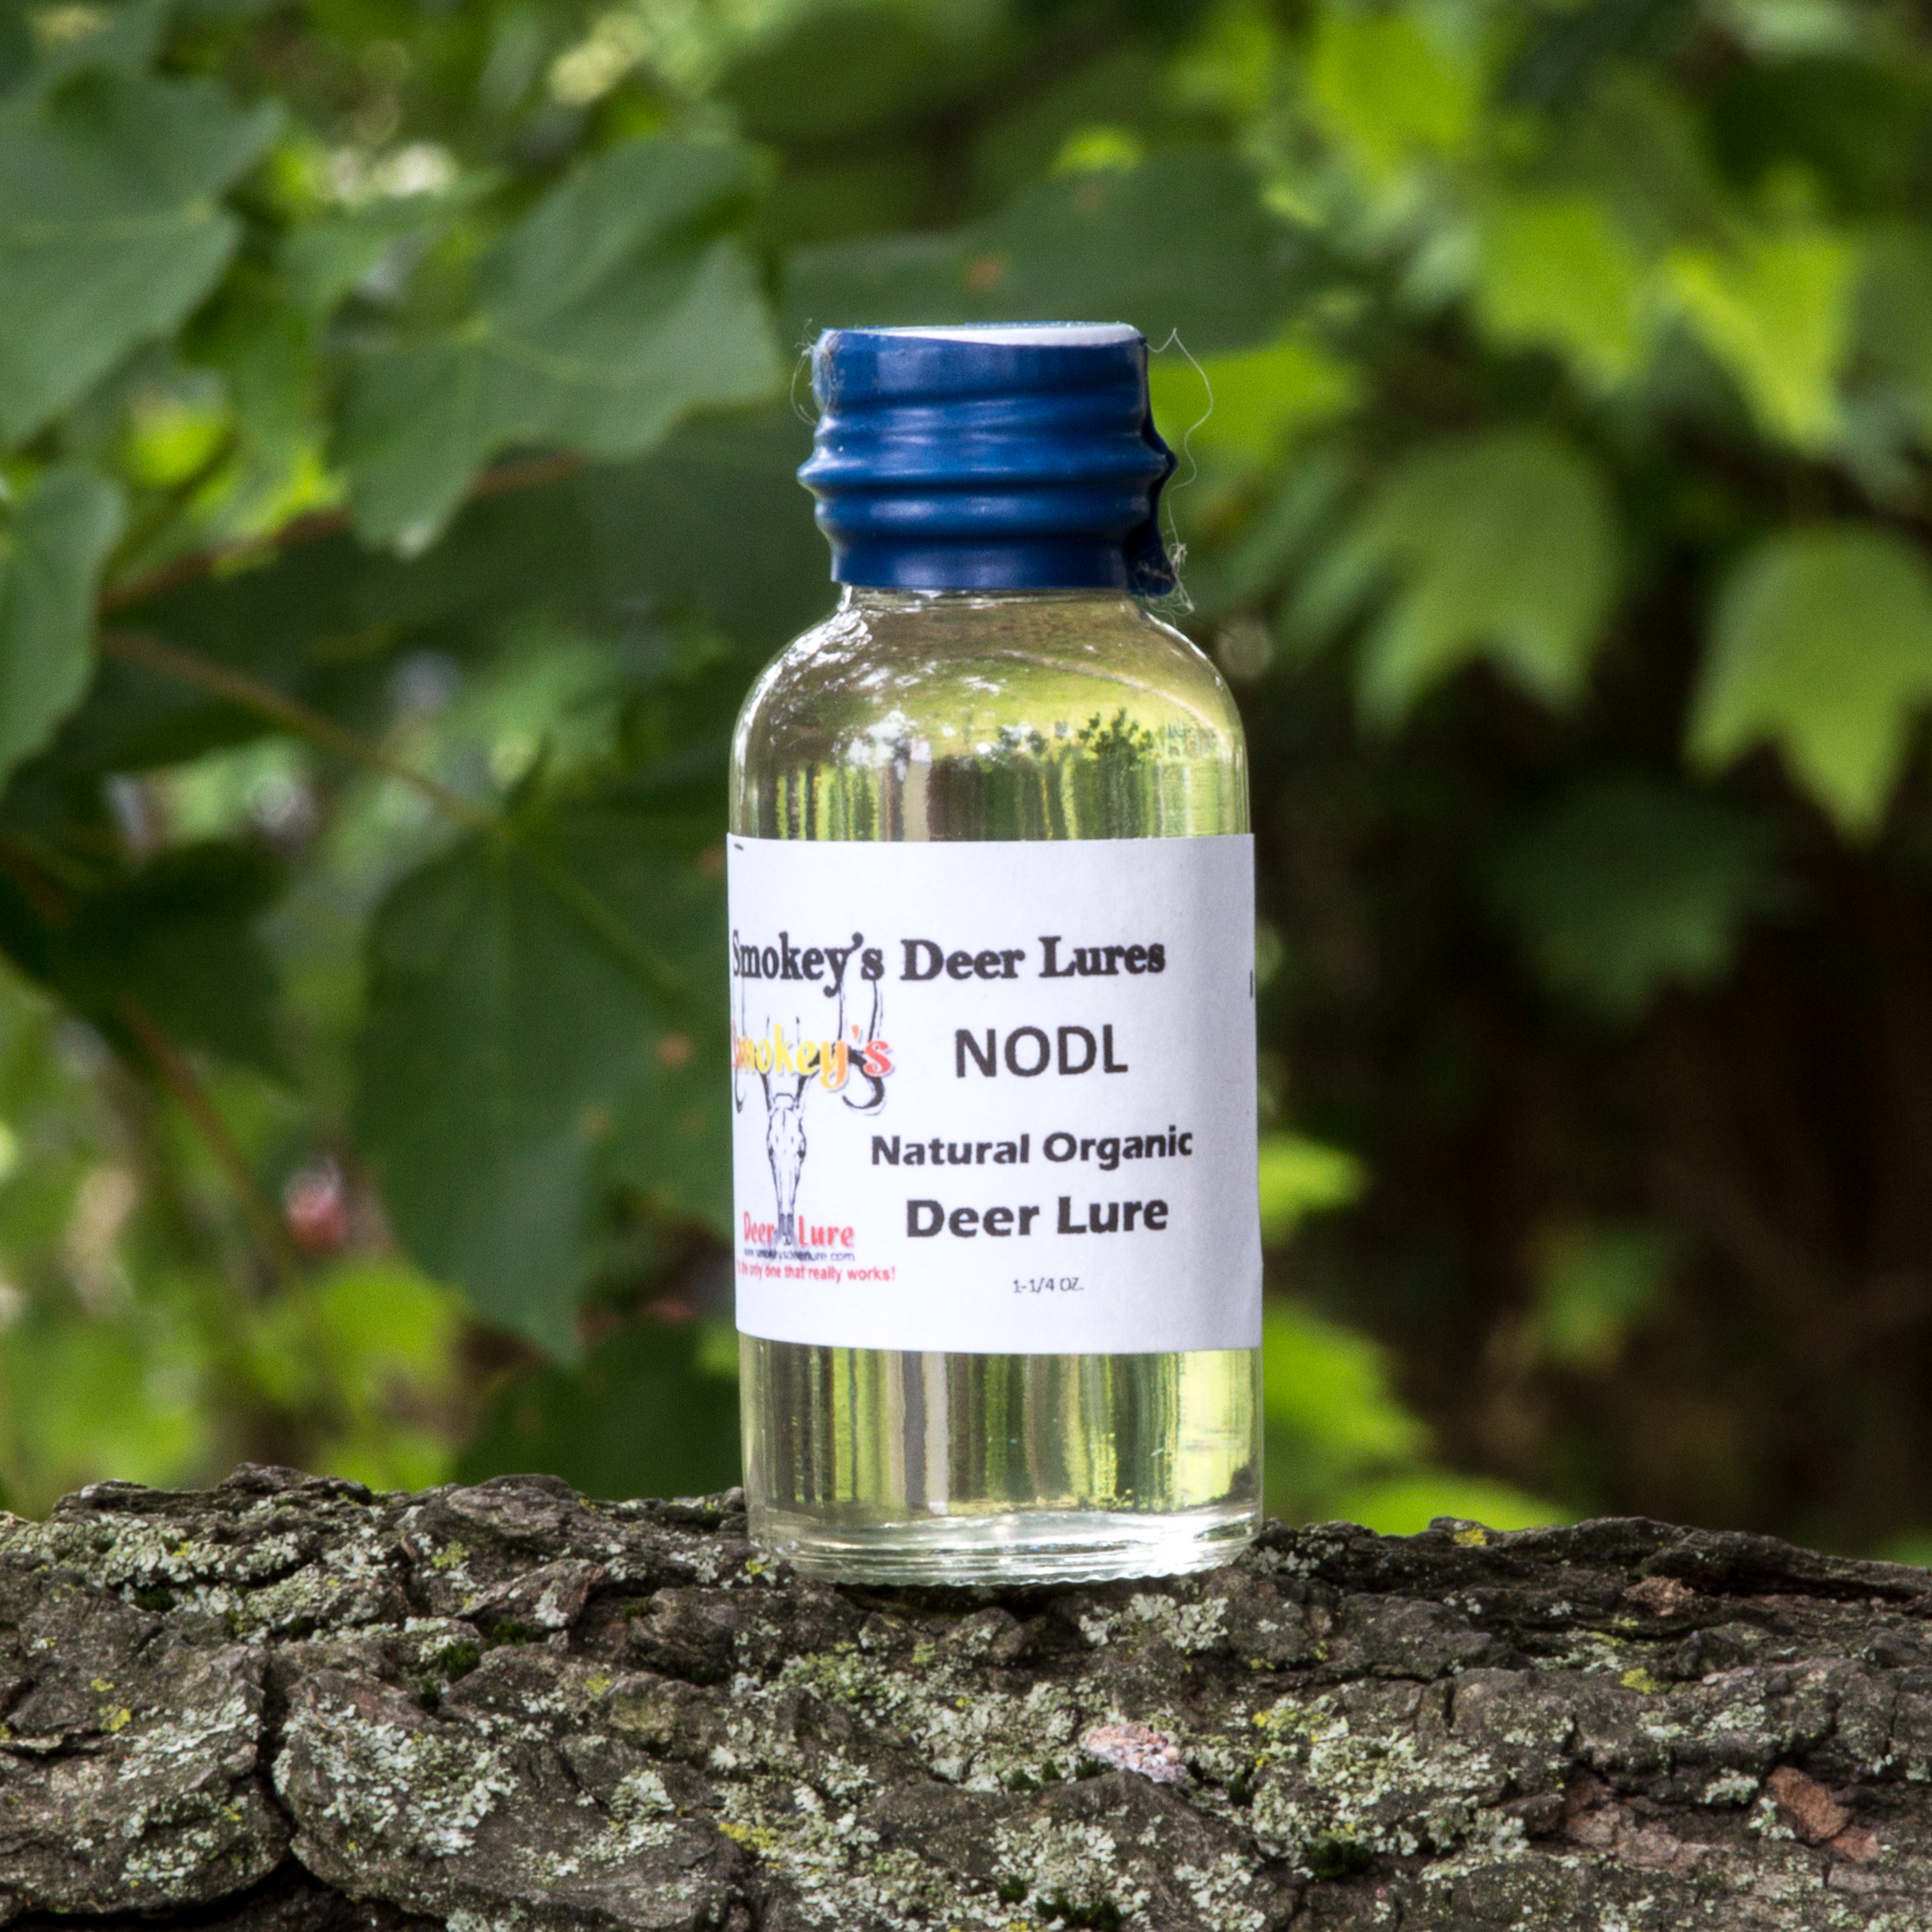 Smokey's Natural Organic Deer Lure- NODL